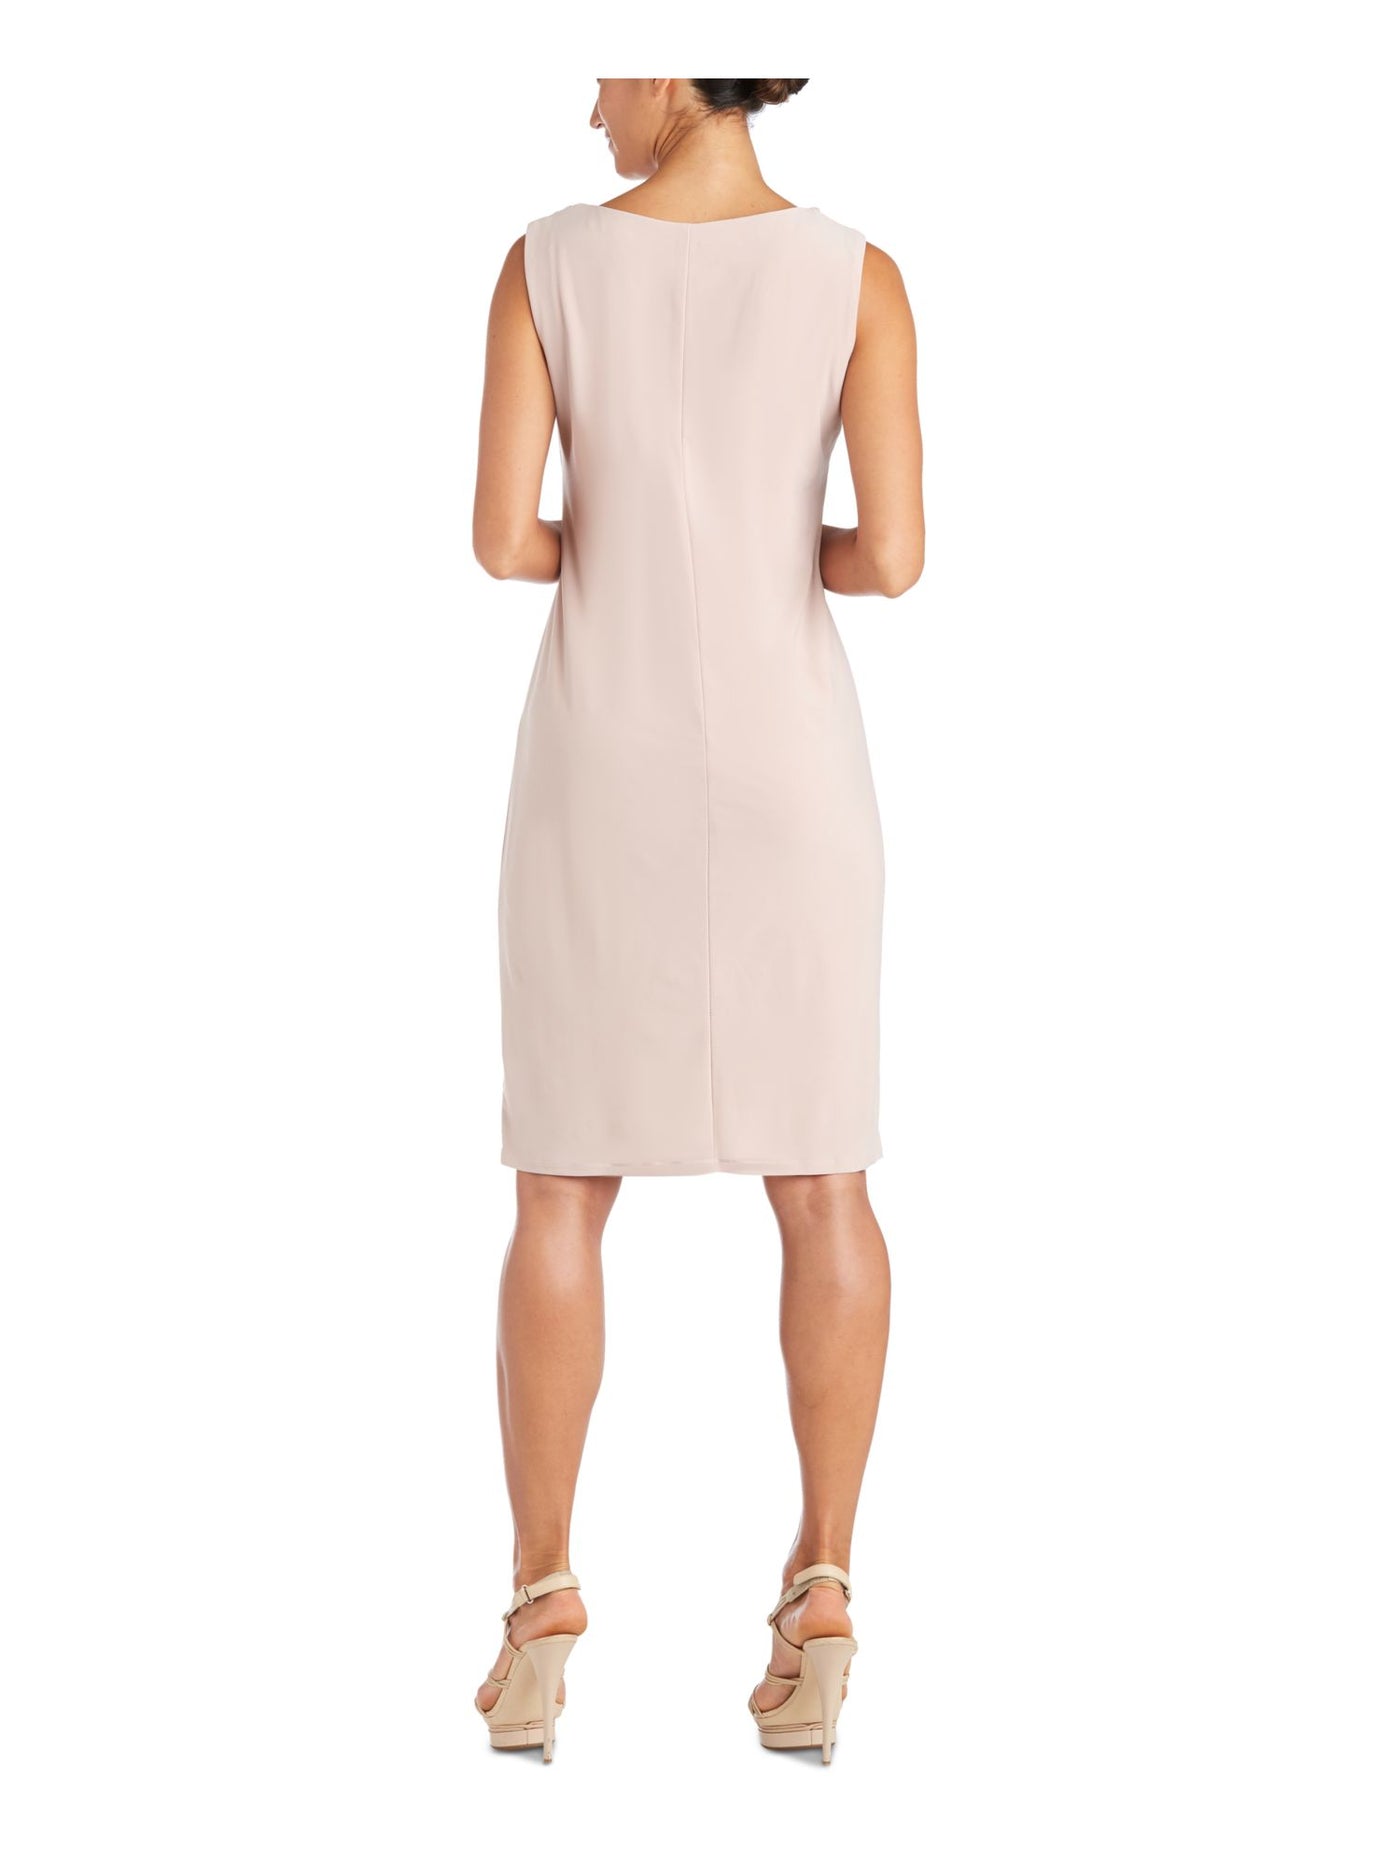 R&M RICHARDS Womens Pink Stretch Sleeveless Round Neck Above The Knee Wear To Work Sheath Dress 16